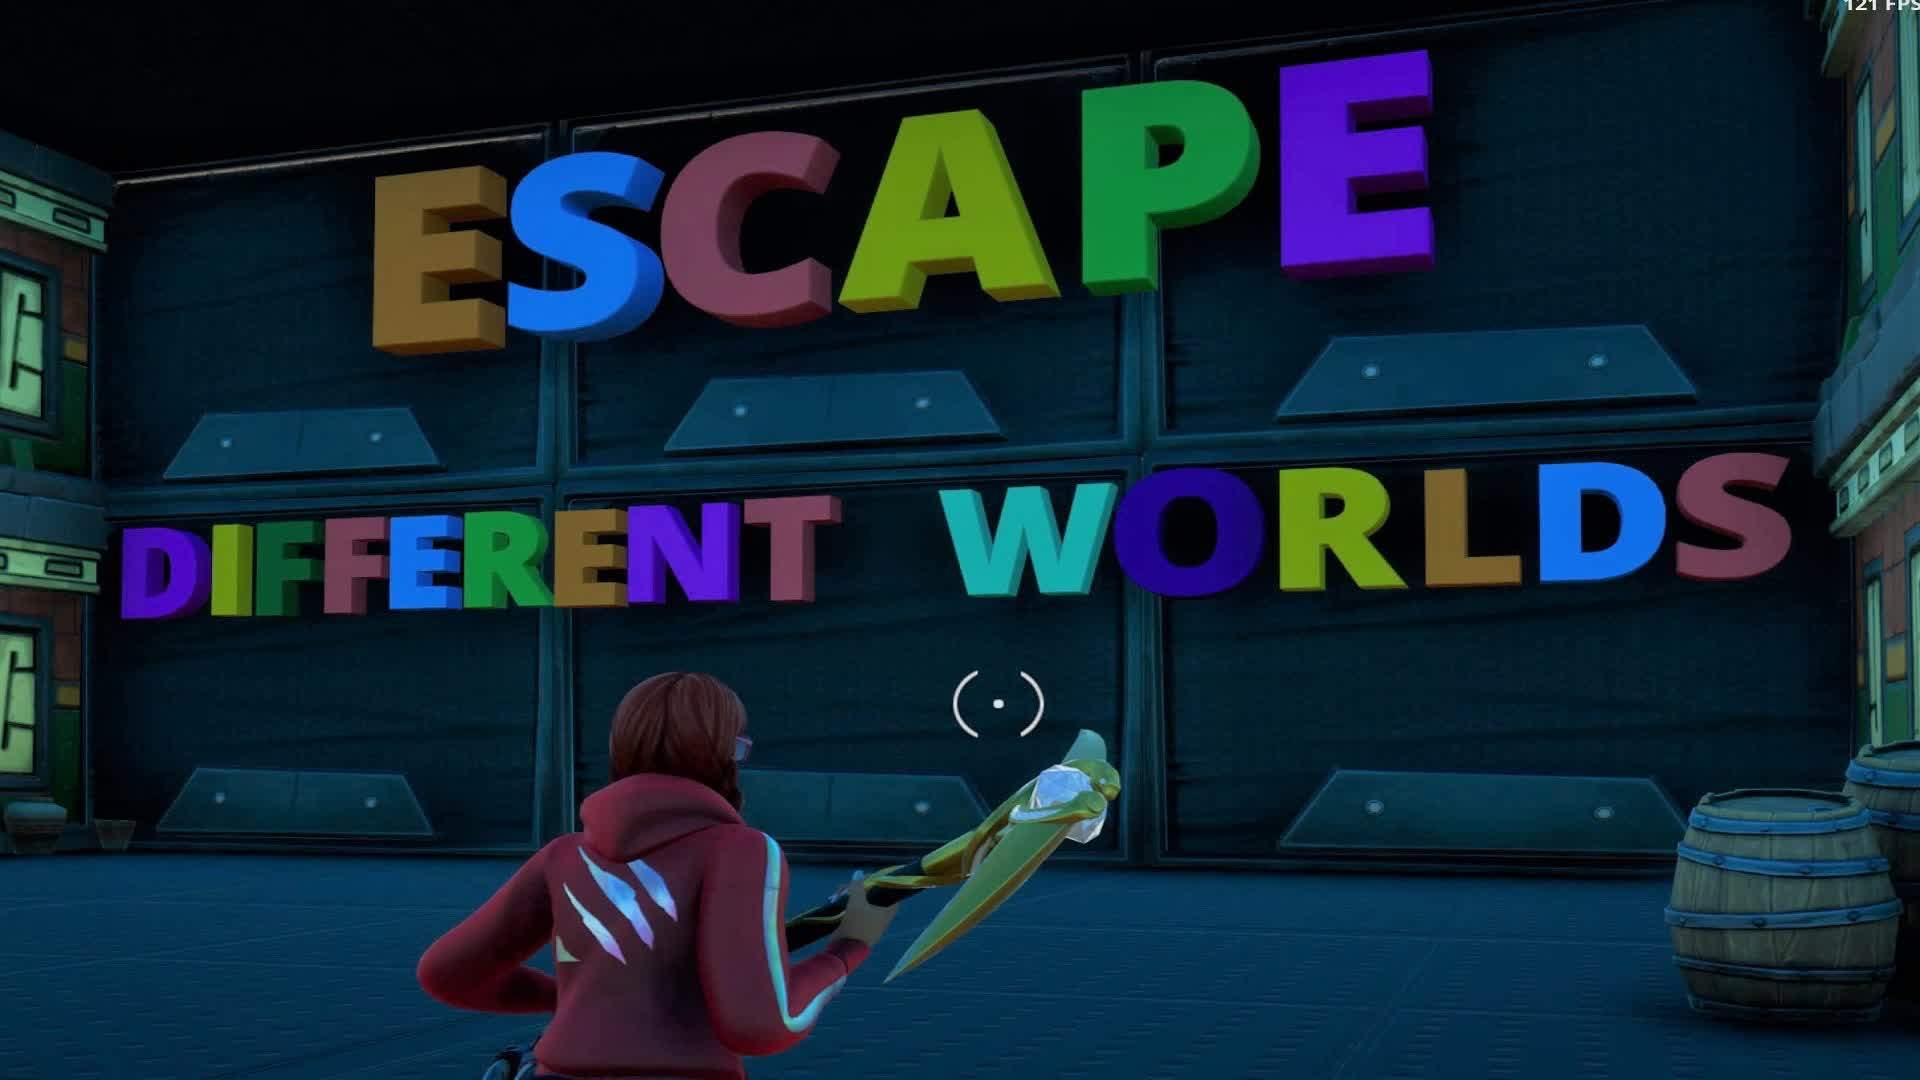 Escape different worlds